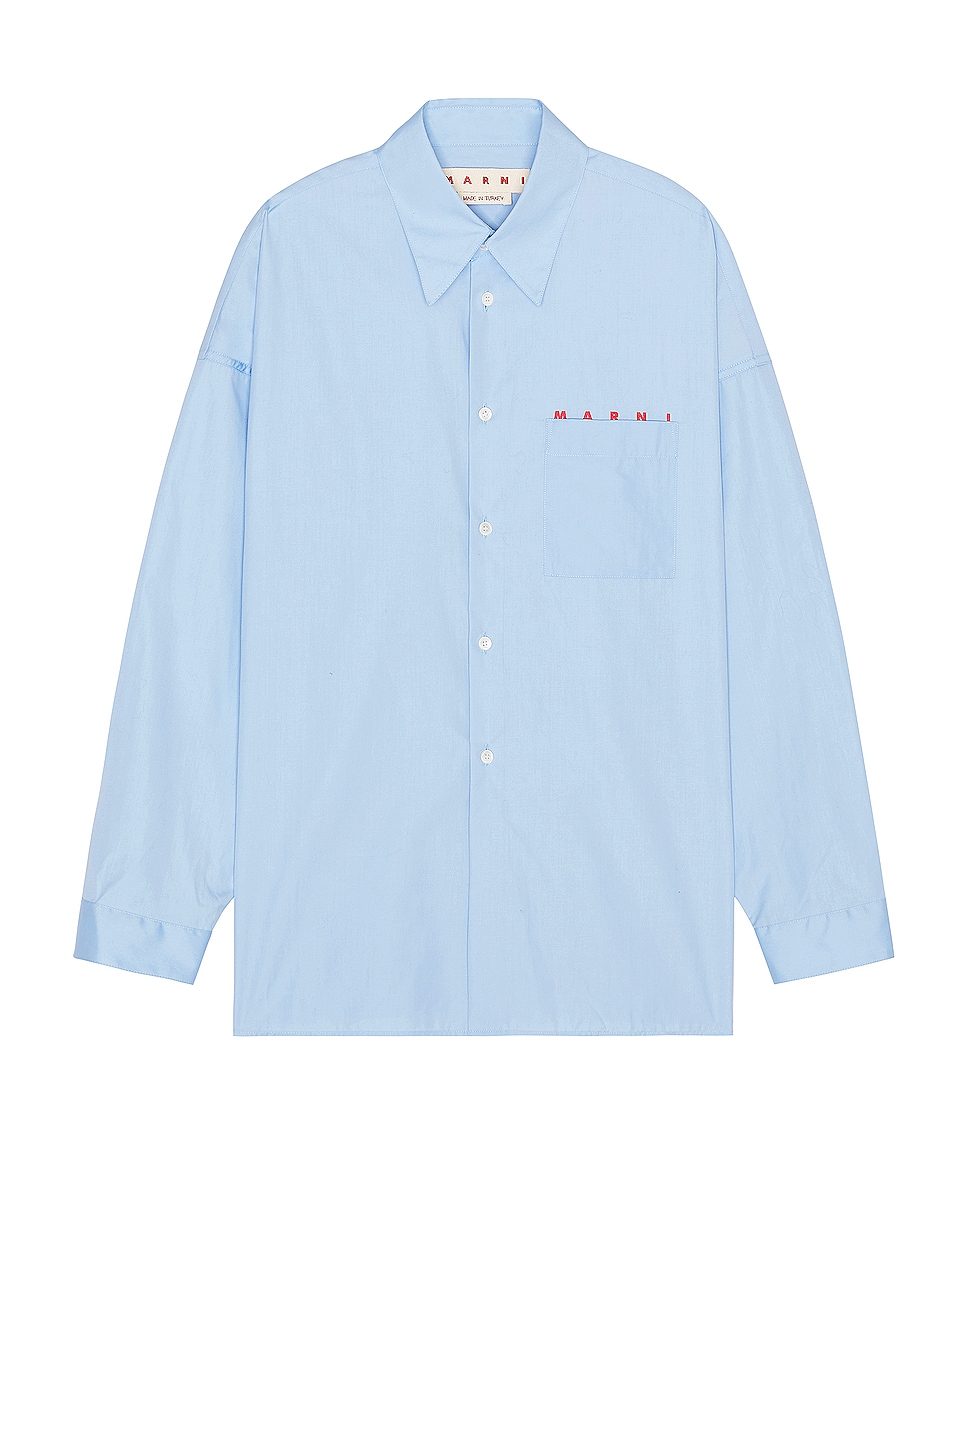 Image 1 of Marni L/S Shirt in Iris Blue